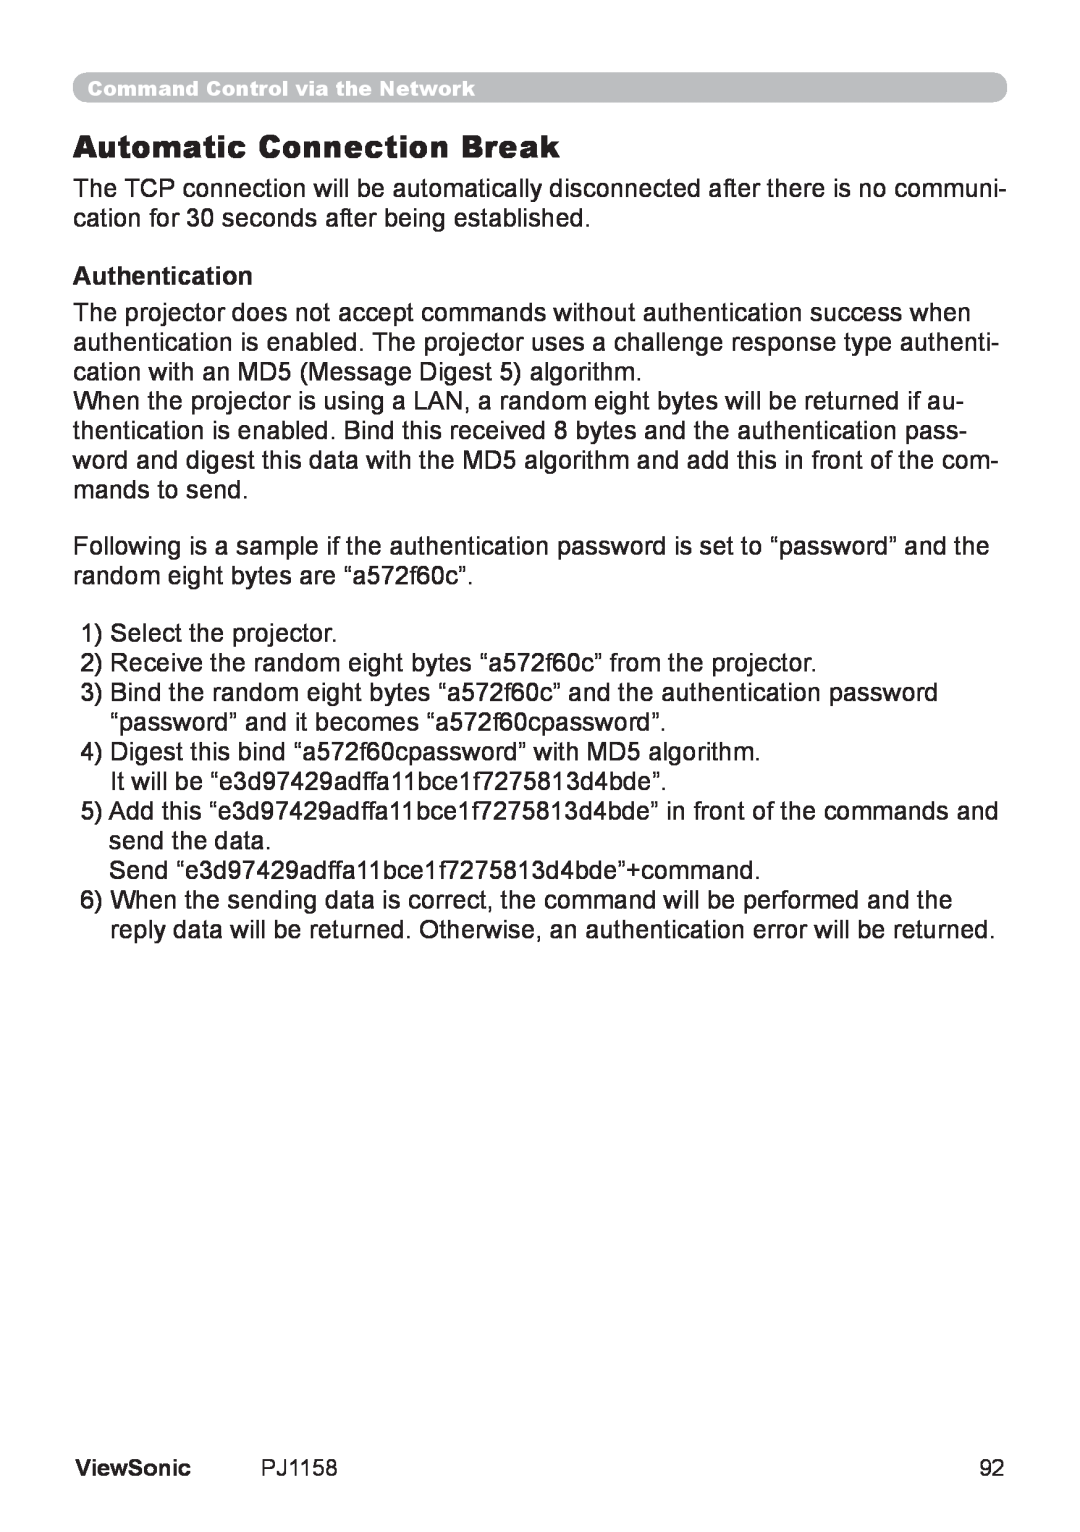 ViewSonic PJ1158 manual Automatic Connection Break, Authentication 